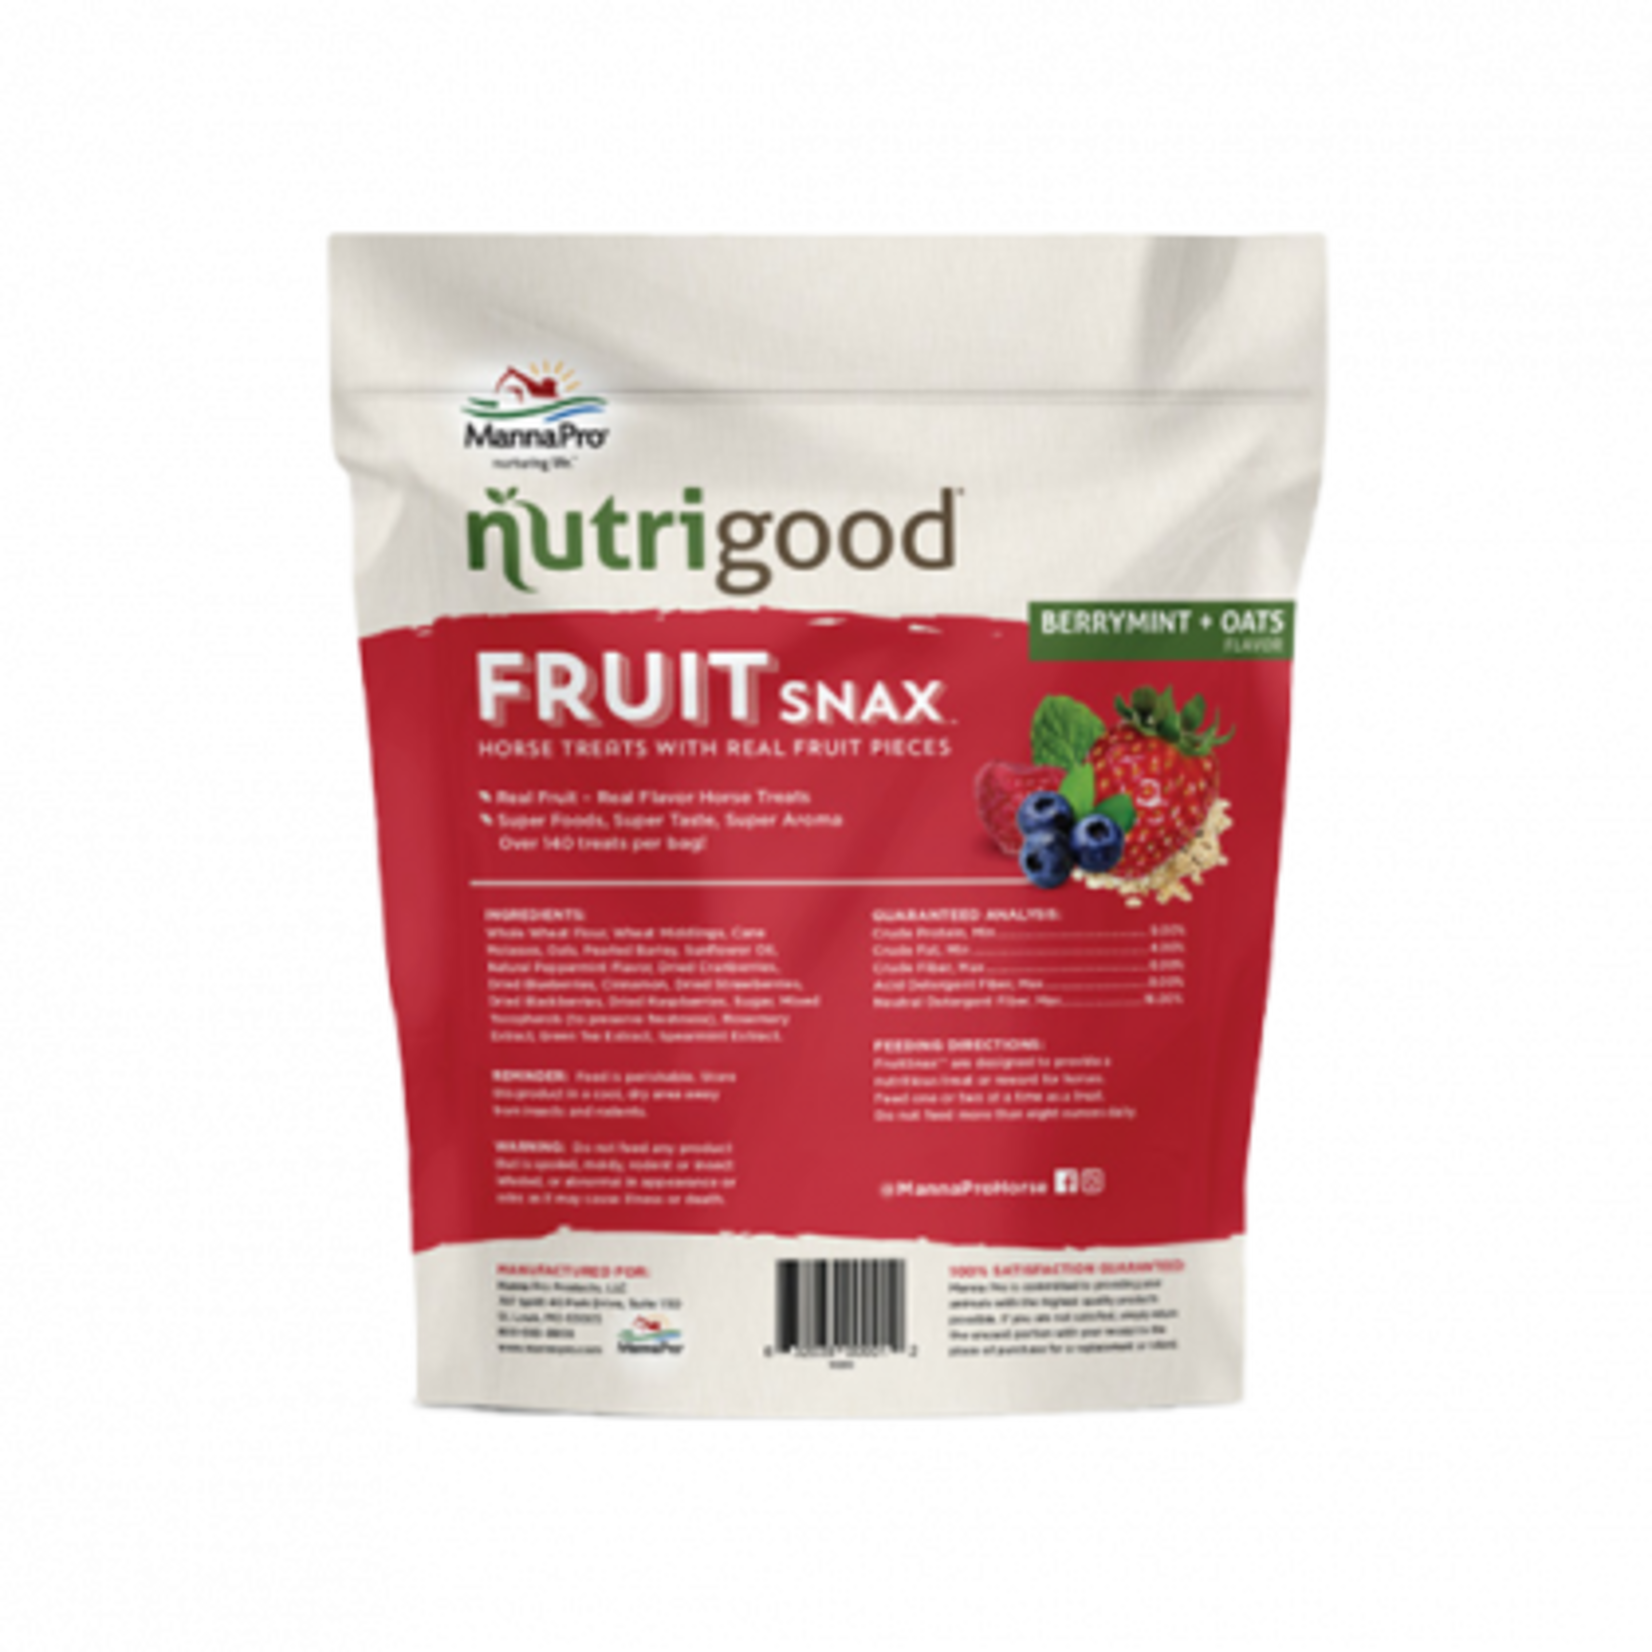 Manna Pro Nutrigood Fruit Snax